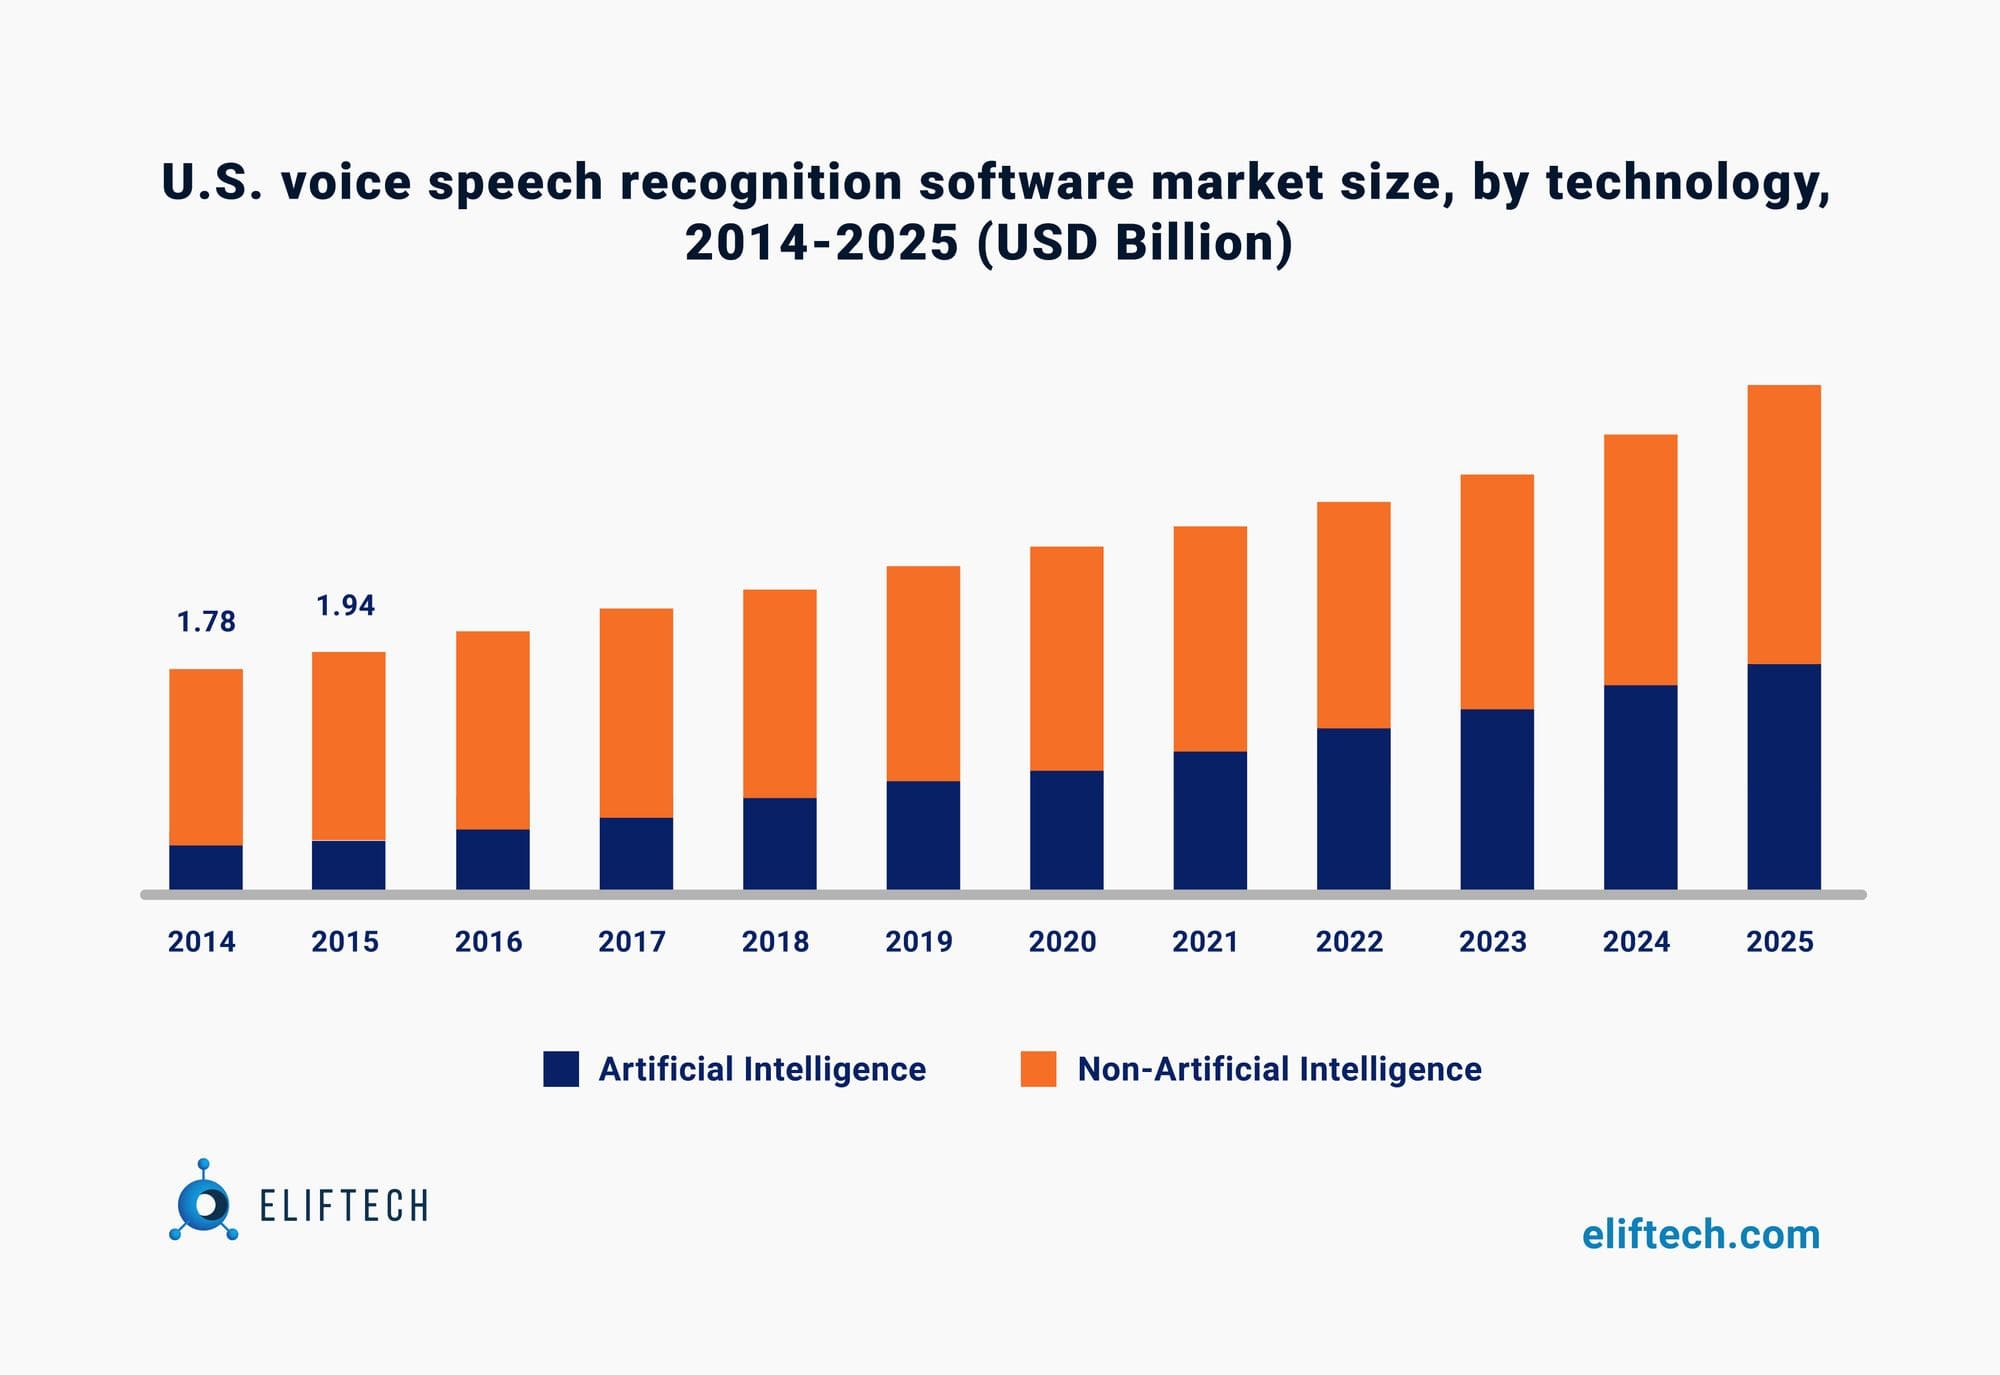 US voice speech recognition software market size